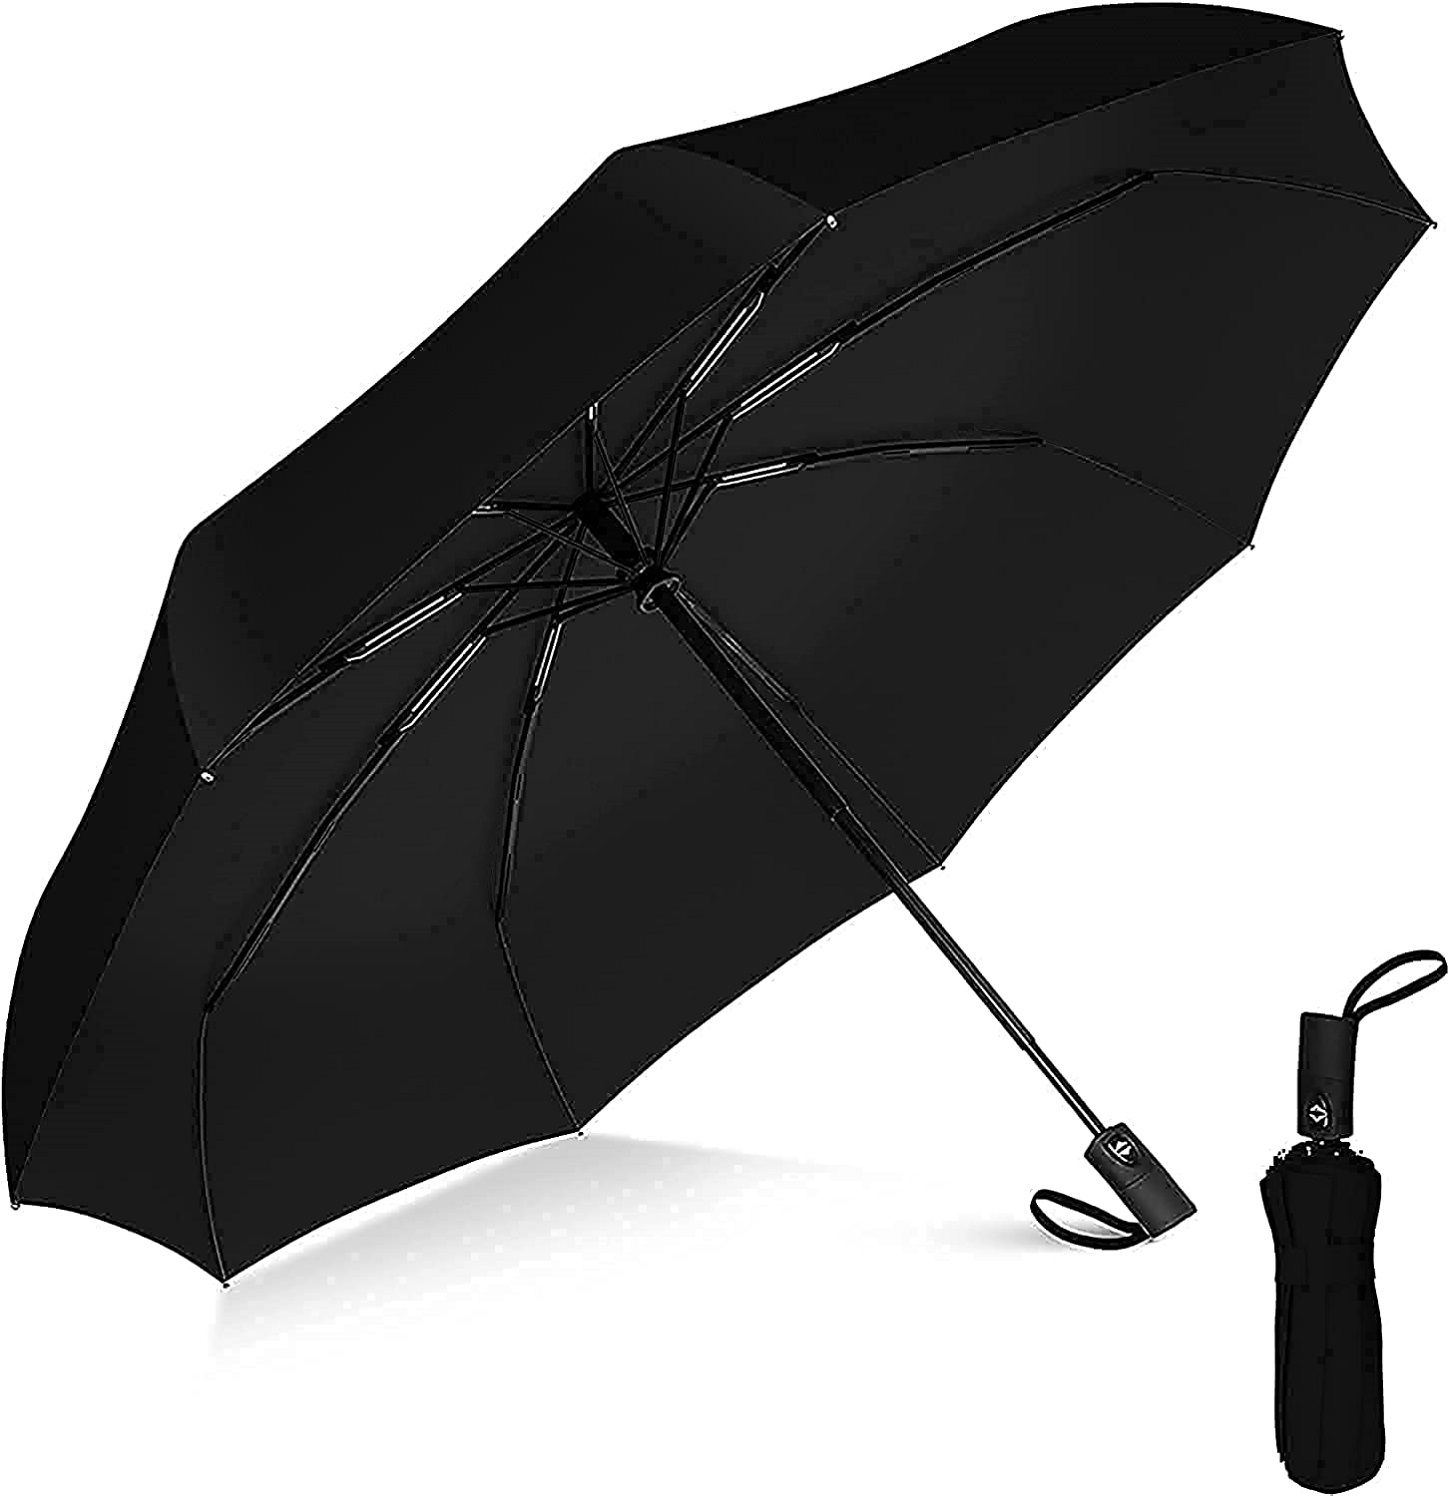     			GEEO Black Umbrella